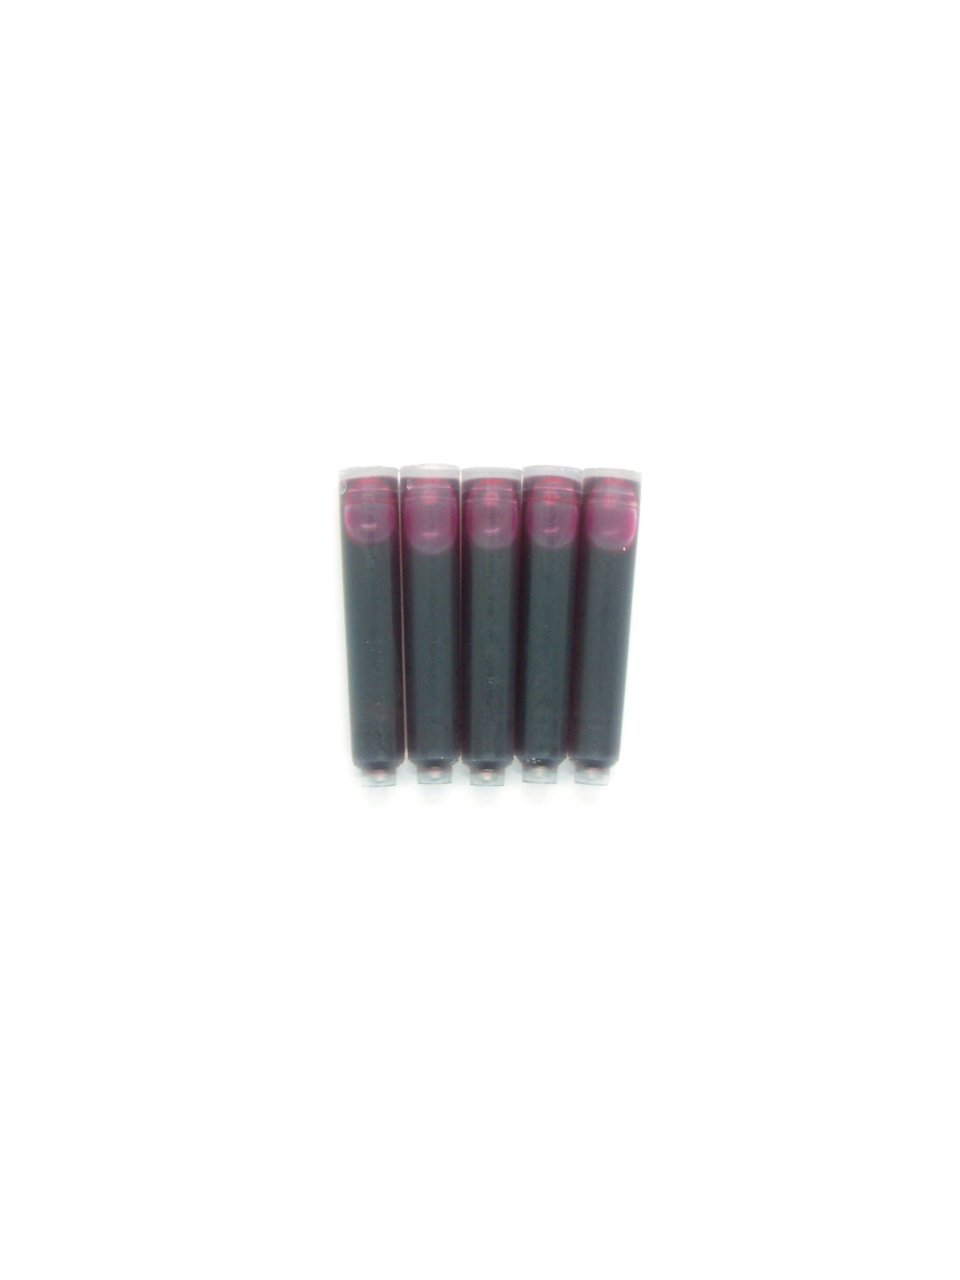 PenConverter Ink Cartridges For Online Fountain Pens (Pink)